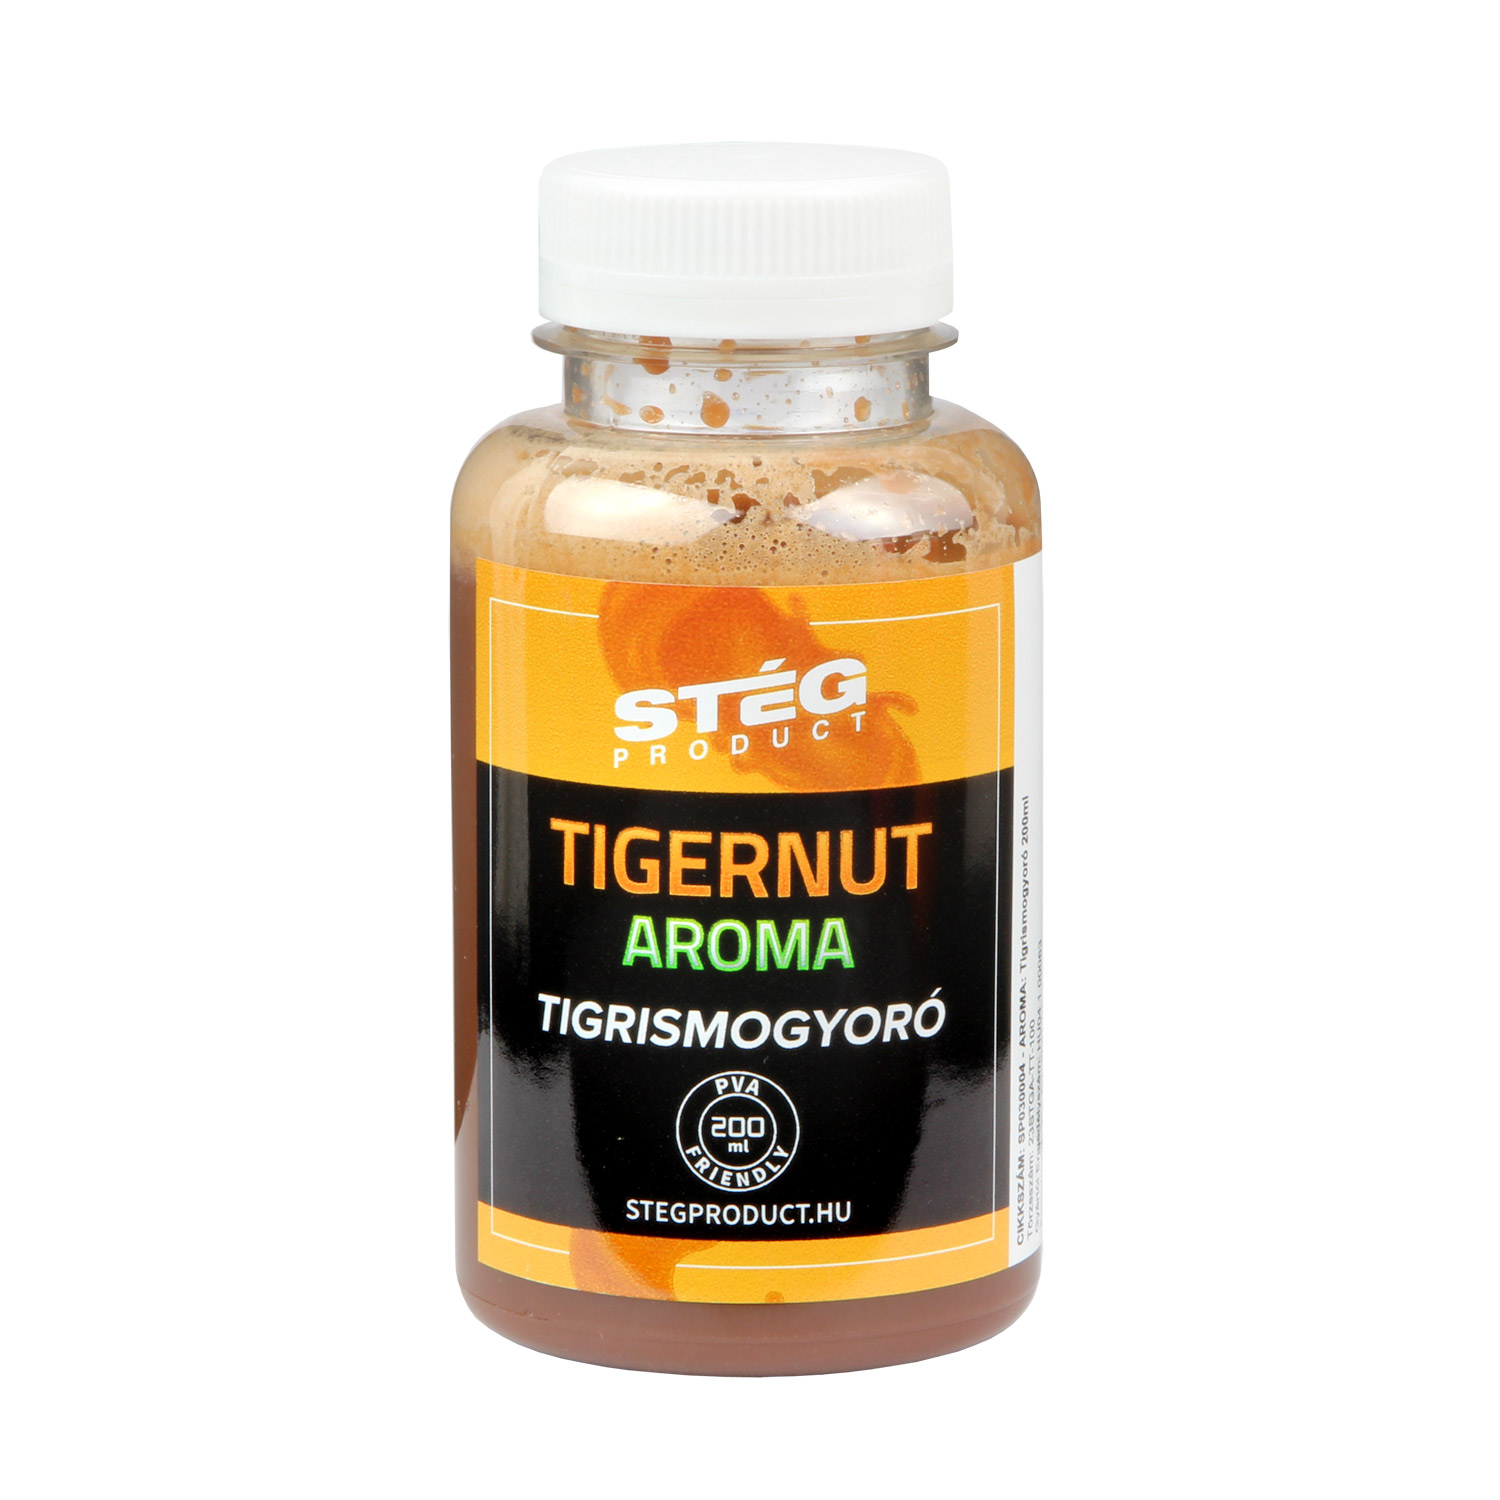 Stg Aroma Tigernut 200ml